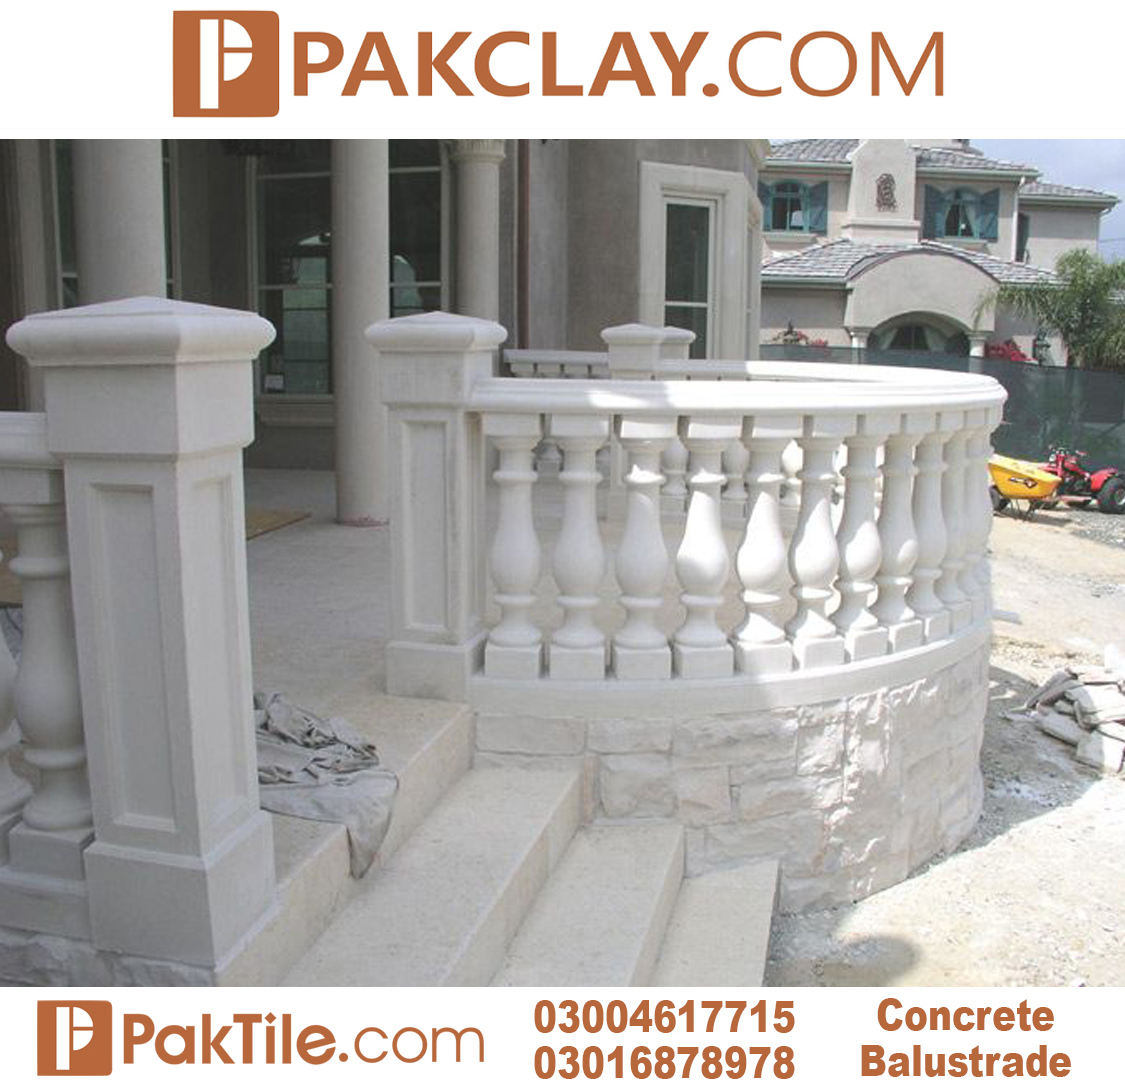 Pak clay tiles Balcony concrete railing design